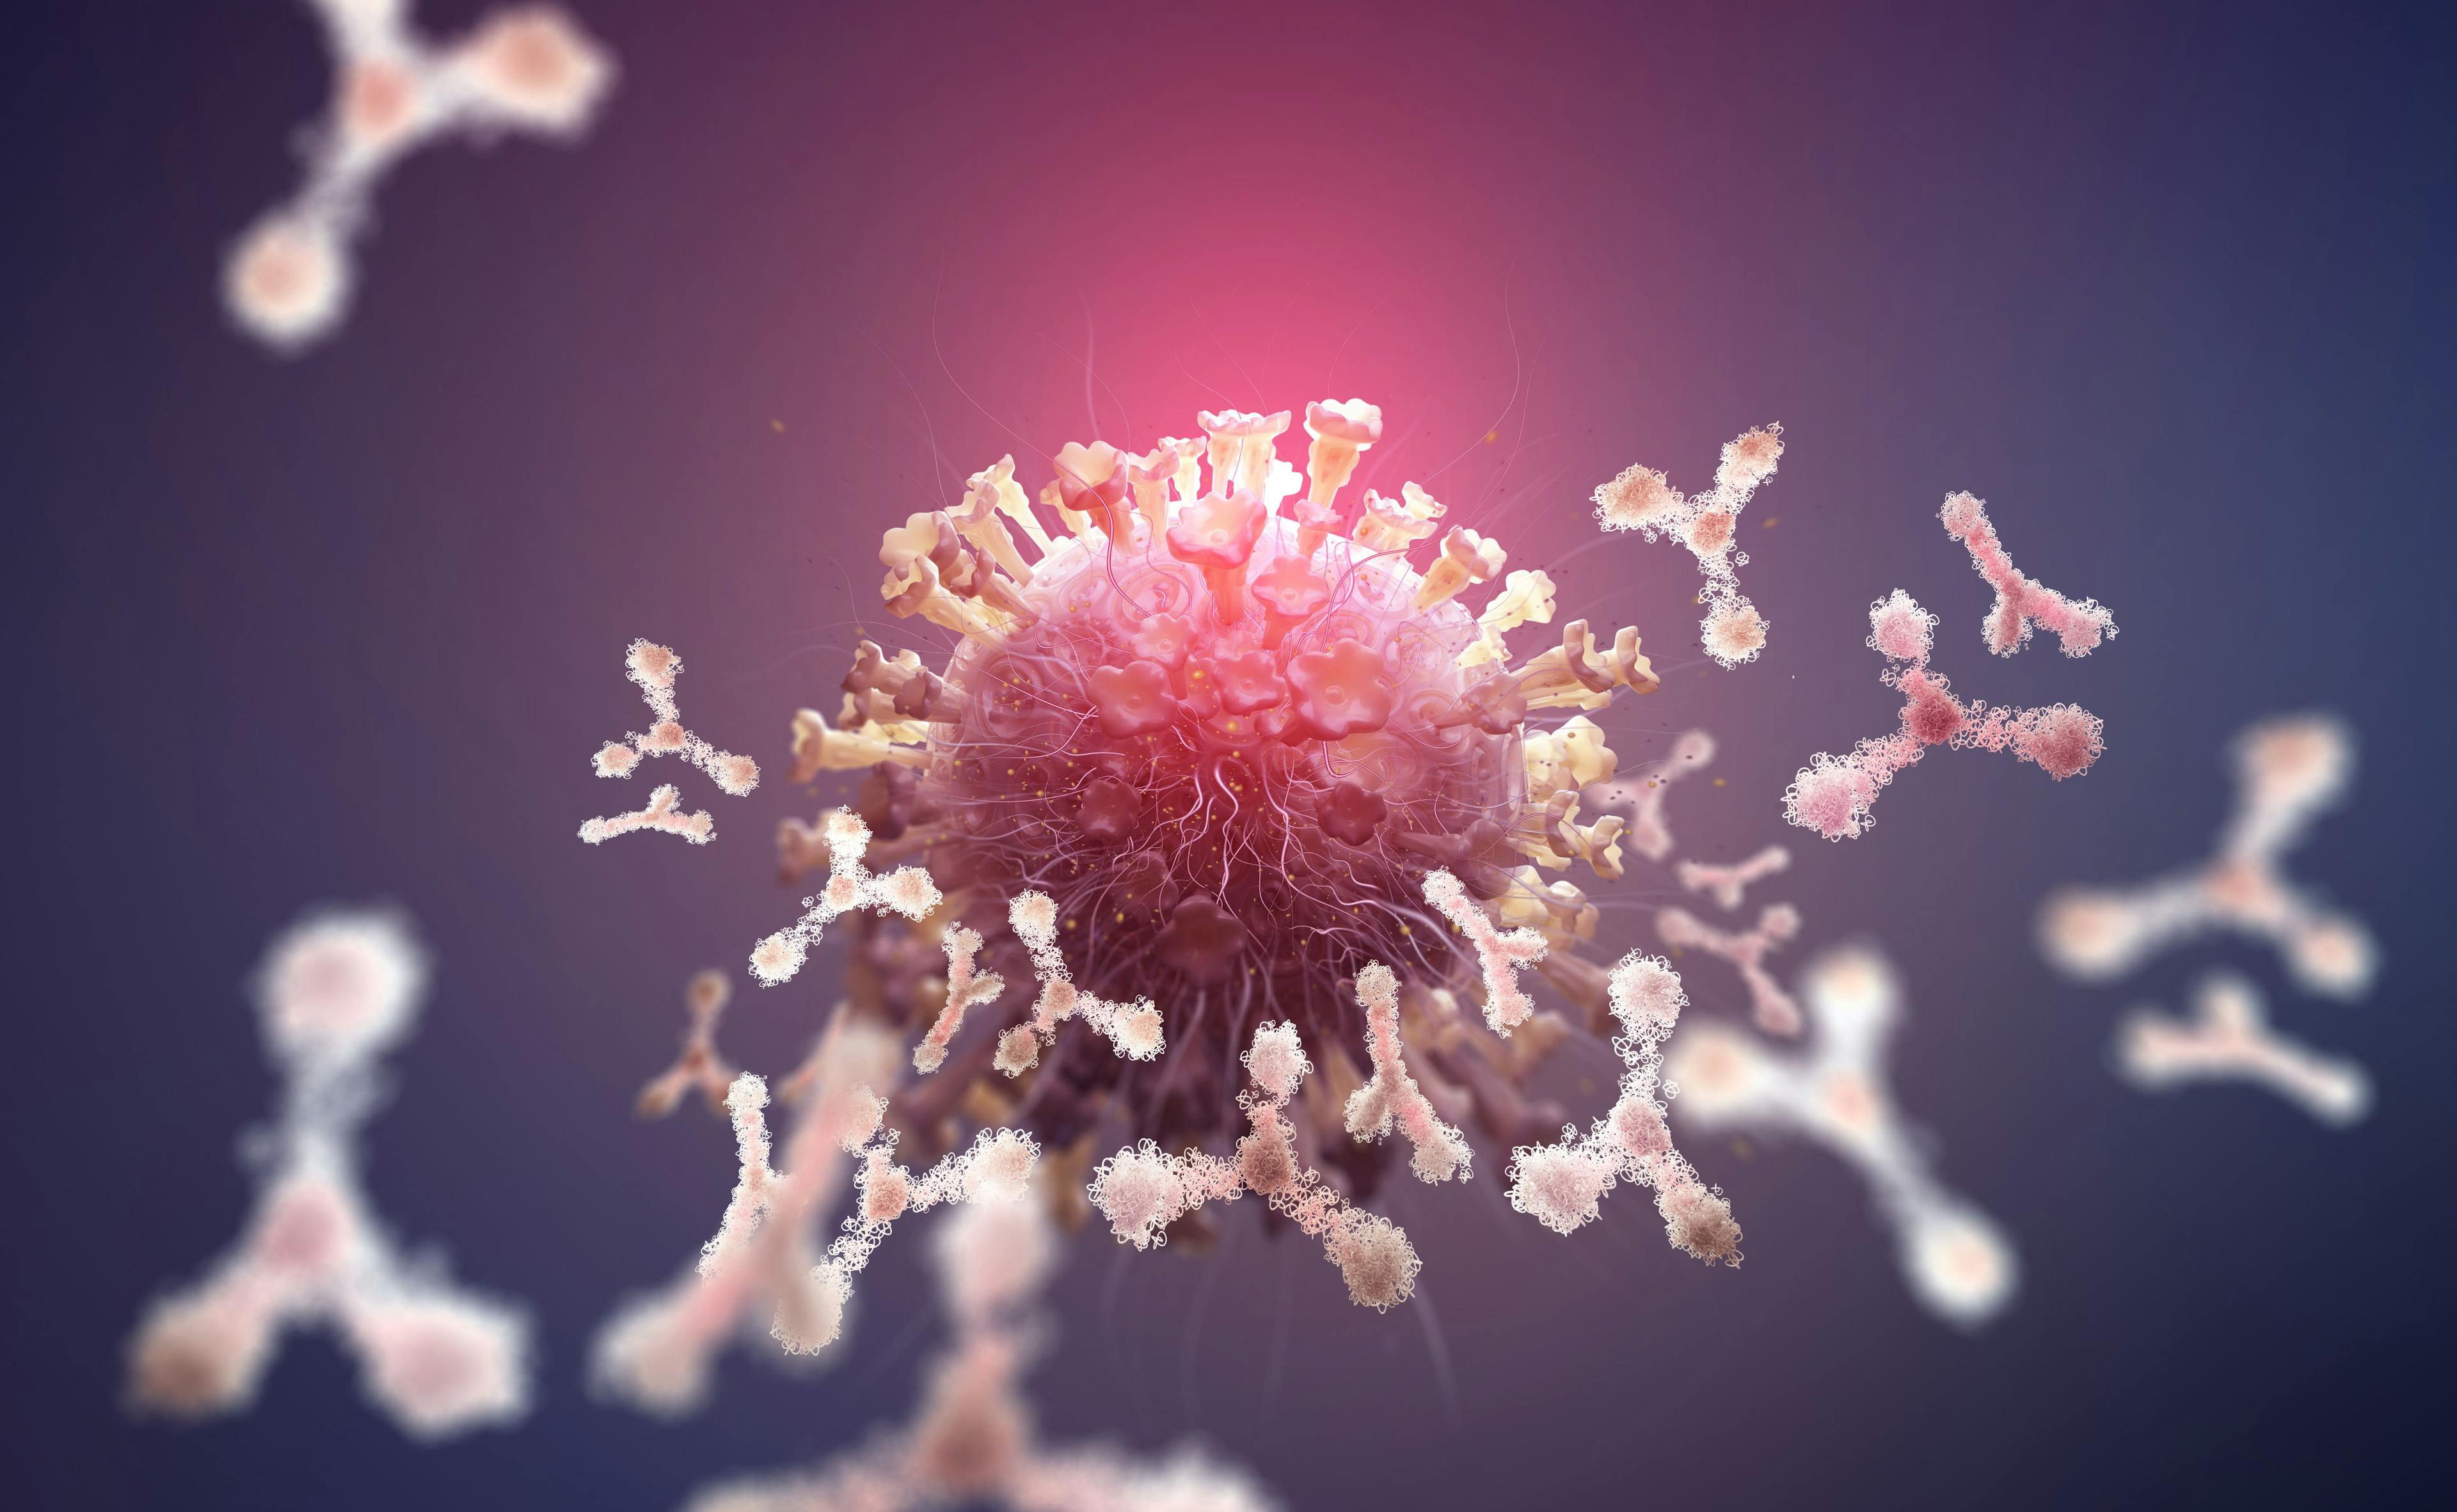 Iceland Study Shows Durable Antibody Response to SARS-CoV-2